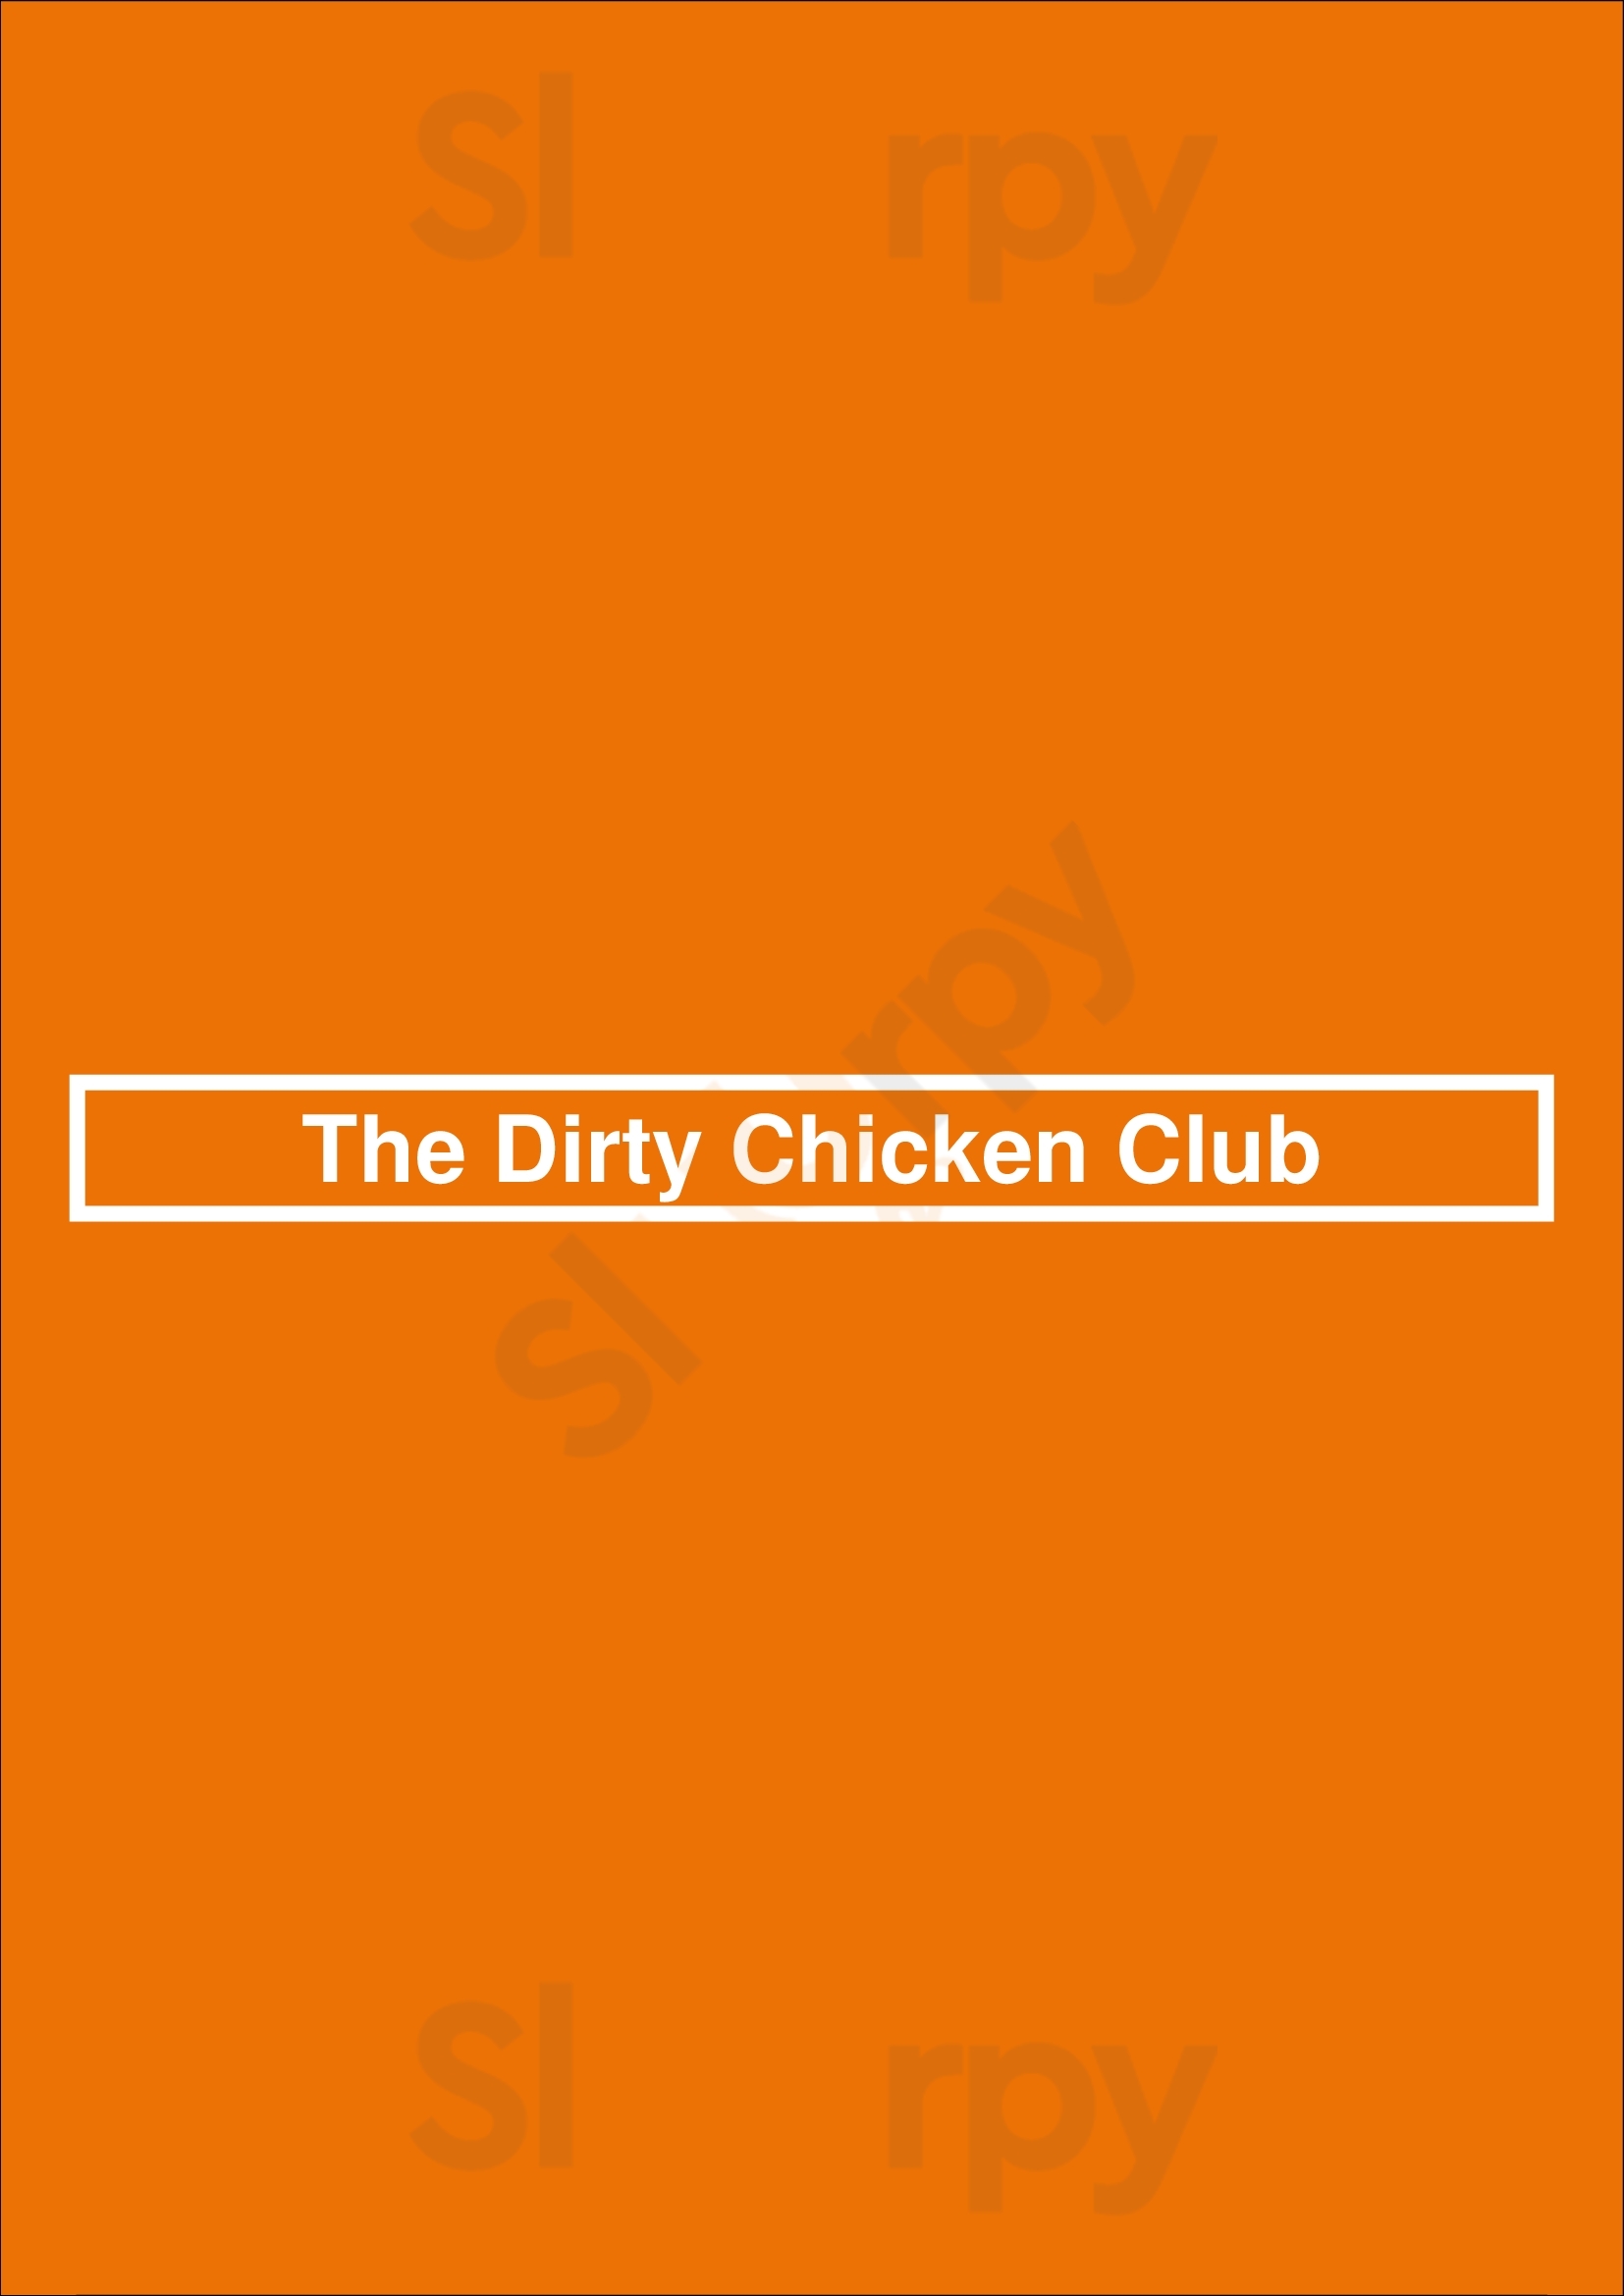 The Dirty Chicken Club Amsterdam Menu - 1